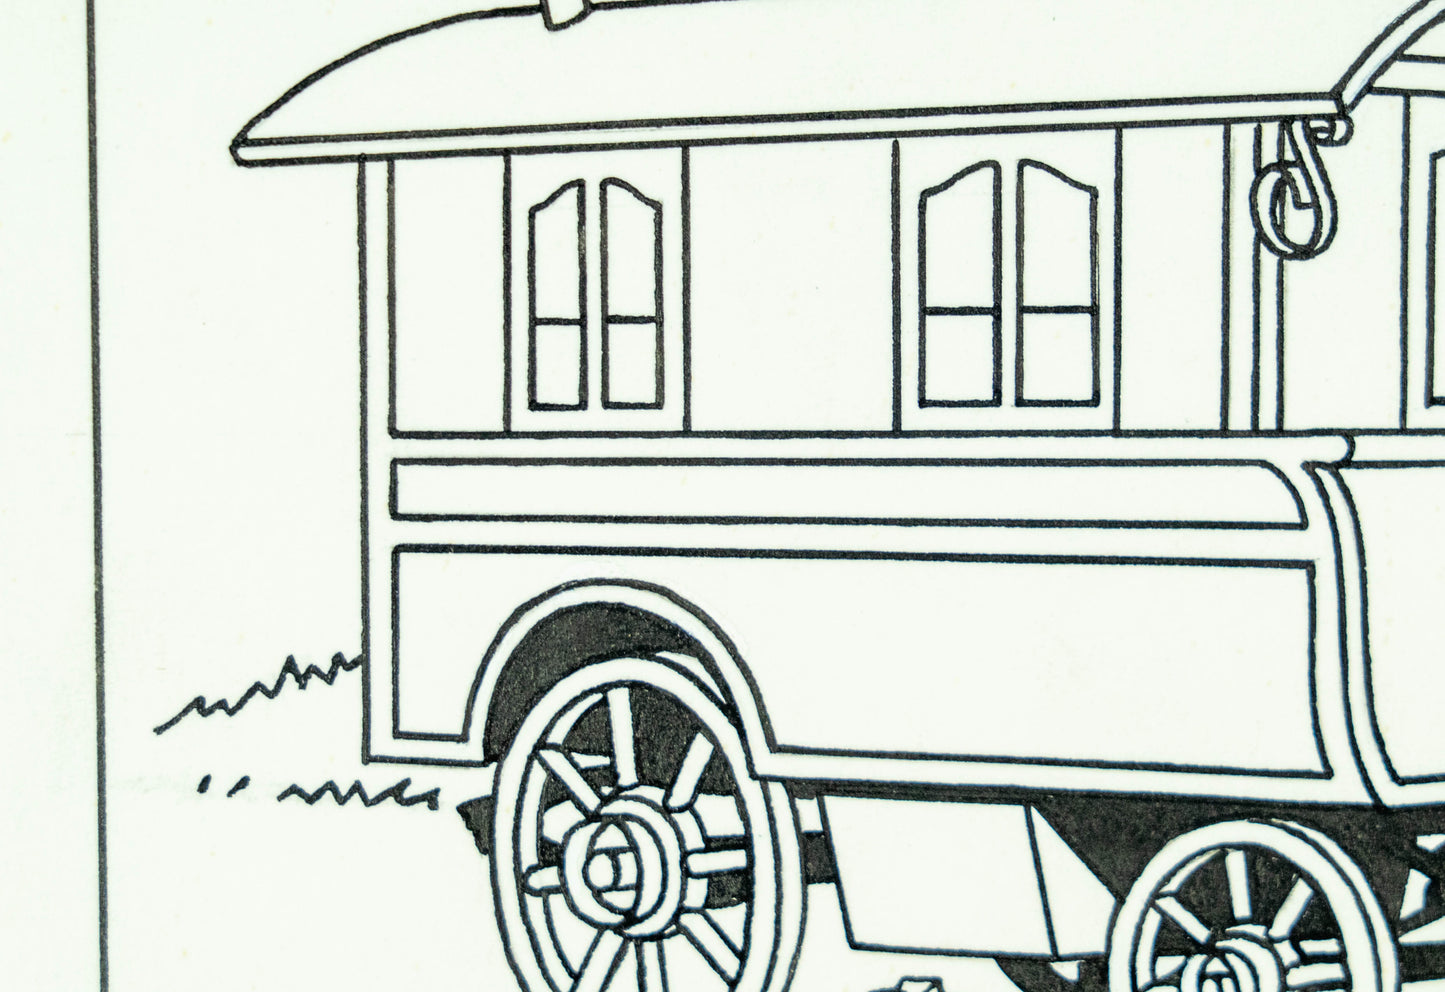 1976 Studios Herge Artwork Design: Gypsy Caravan in Black Ink Original Tintin